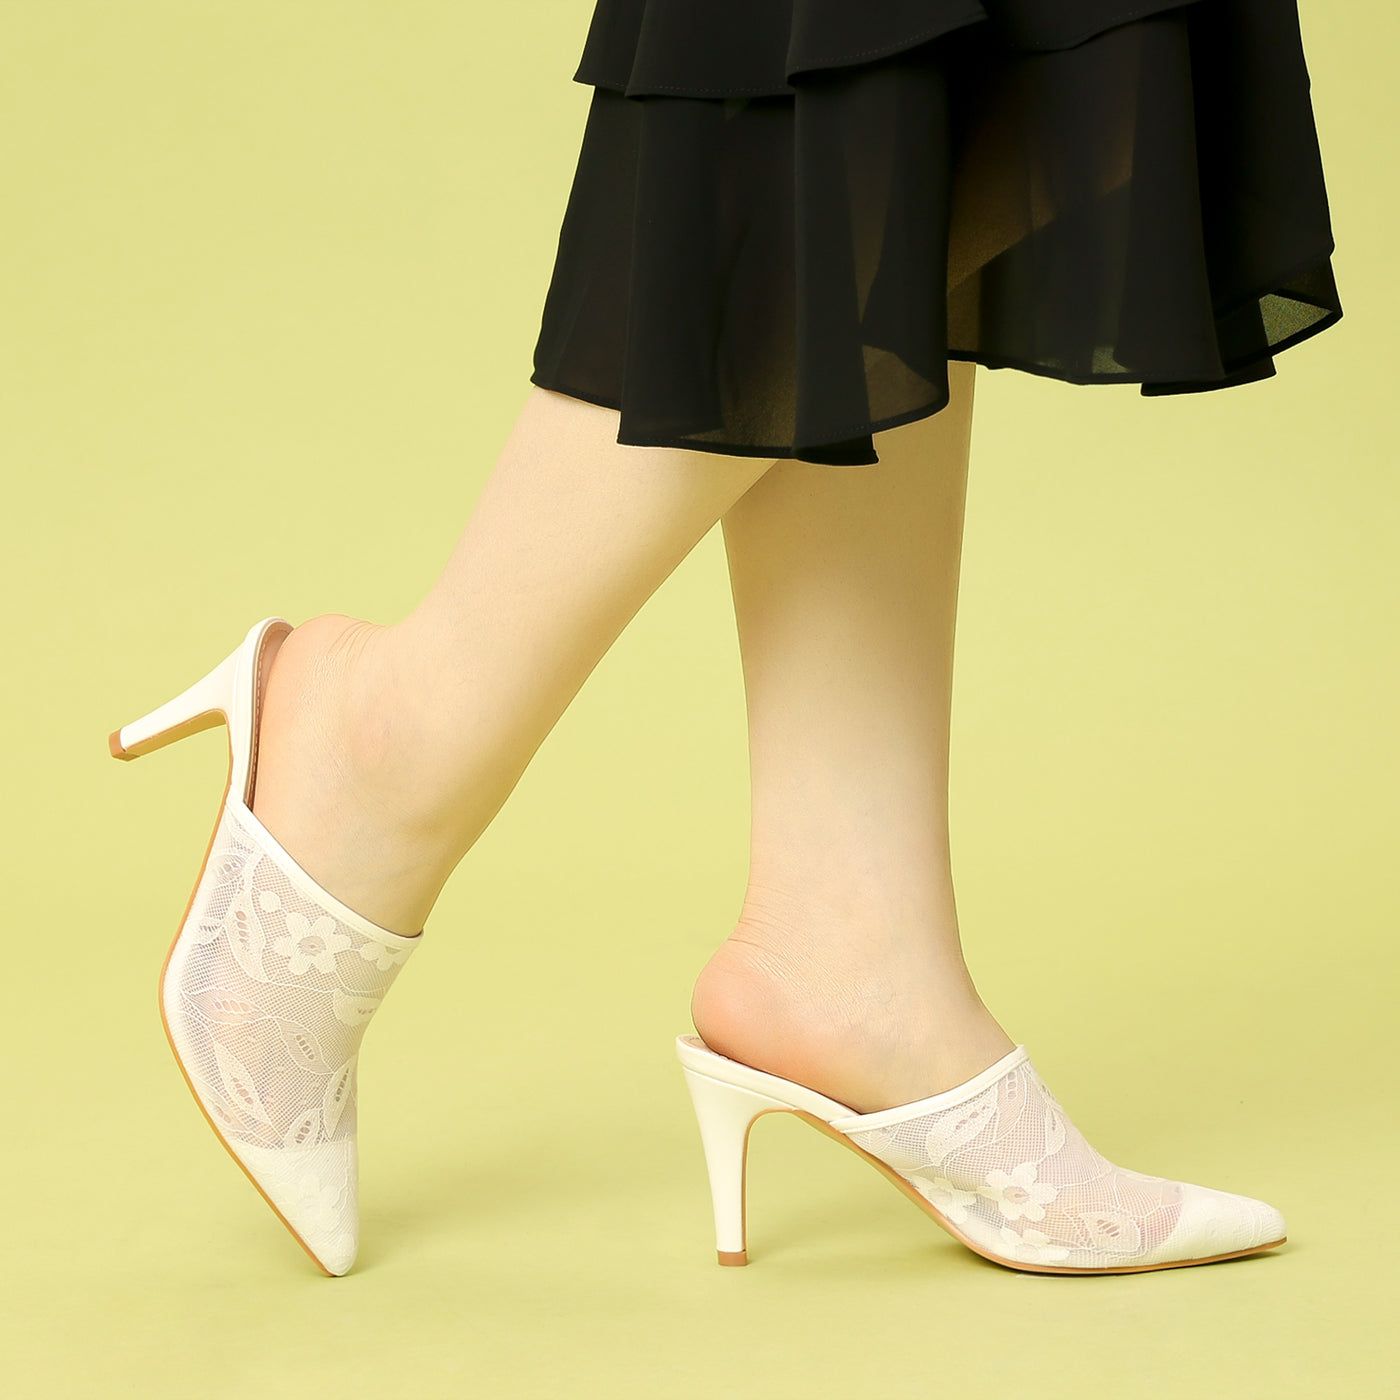 Allegra K Women's Lace Heels Sandals Mesh Floral Embroidered Stiletto Heels Slide Mules